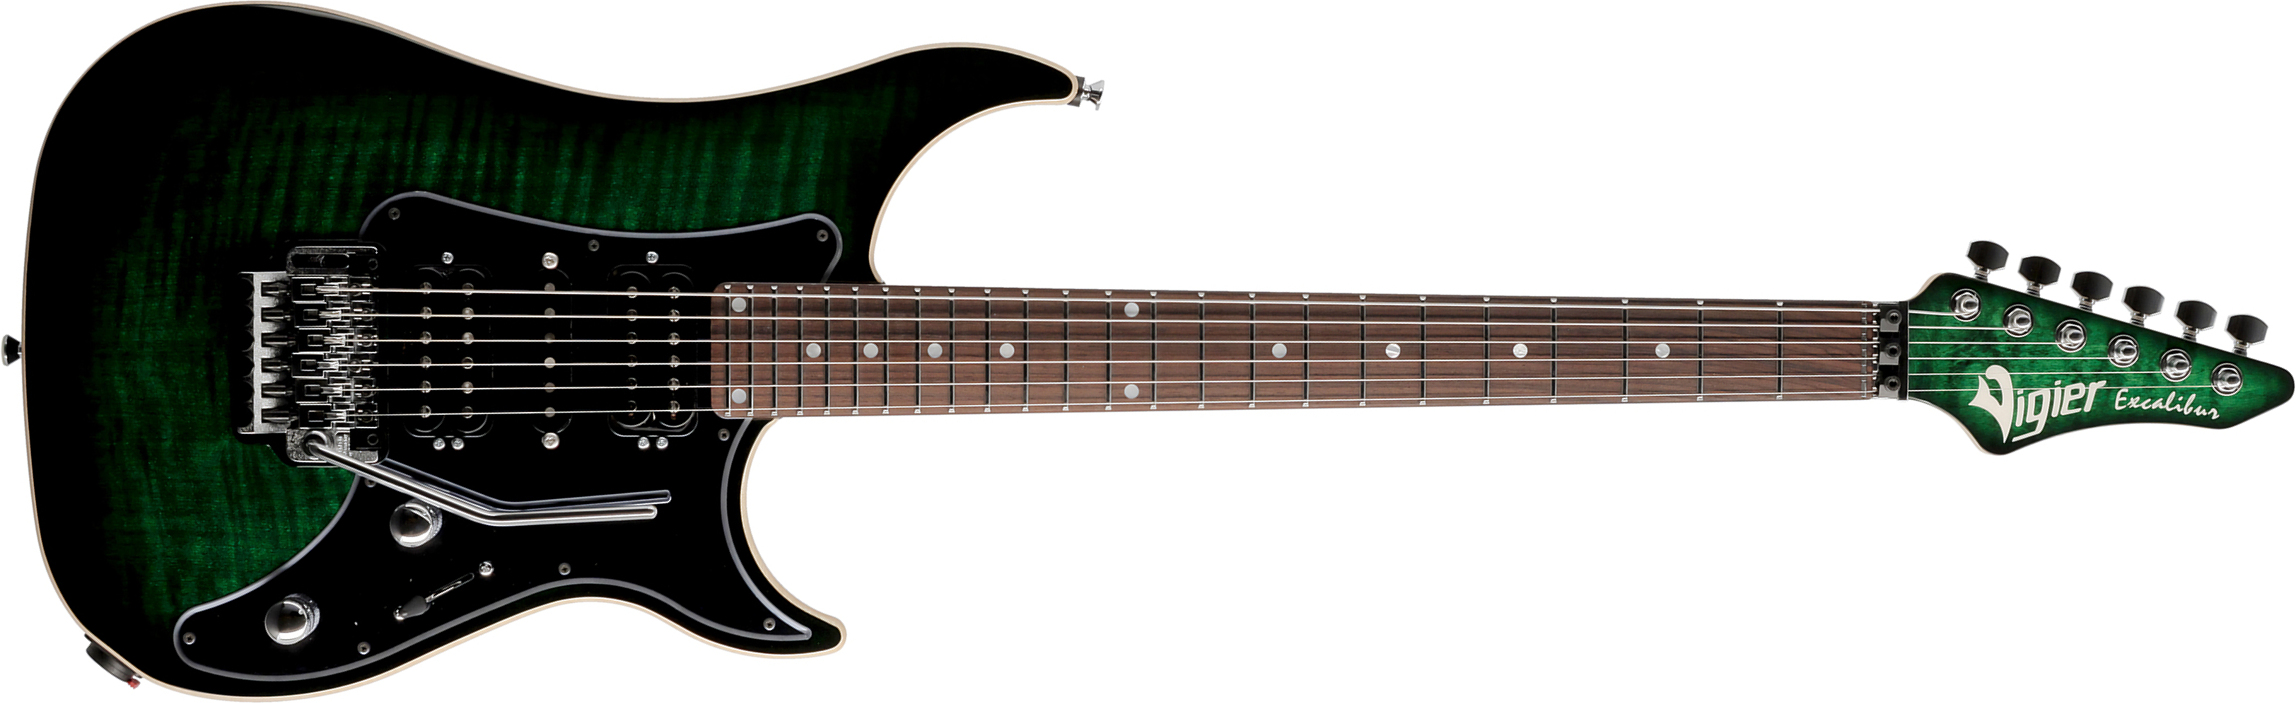 Vigier Excalibur Custom Hsh Fr Rw - Mysterious Green - E-Gitarre in Str-Form - Main picture